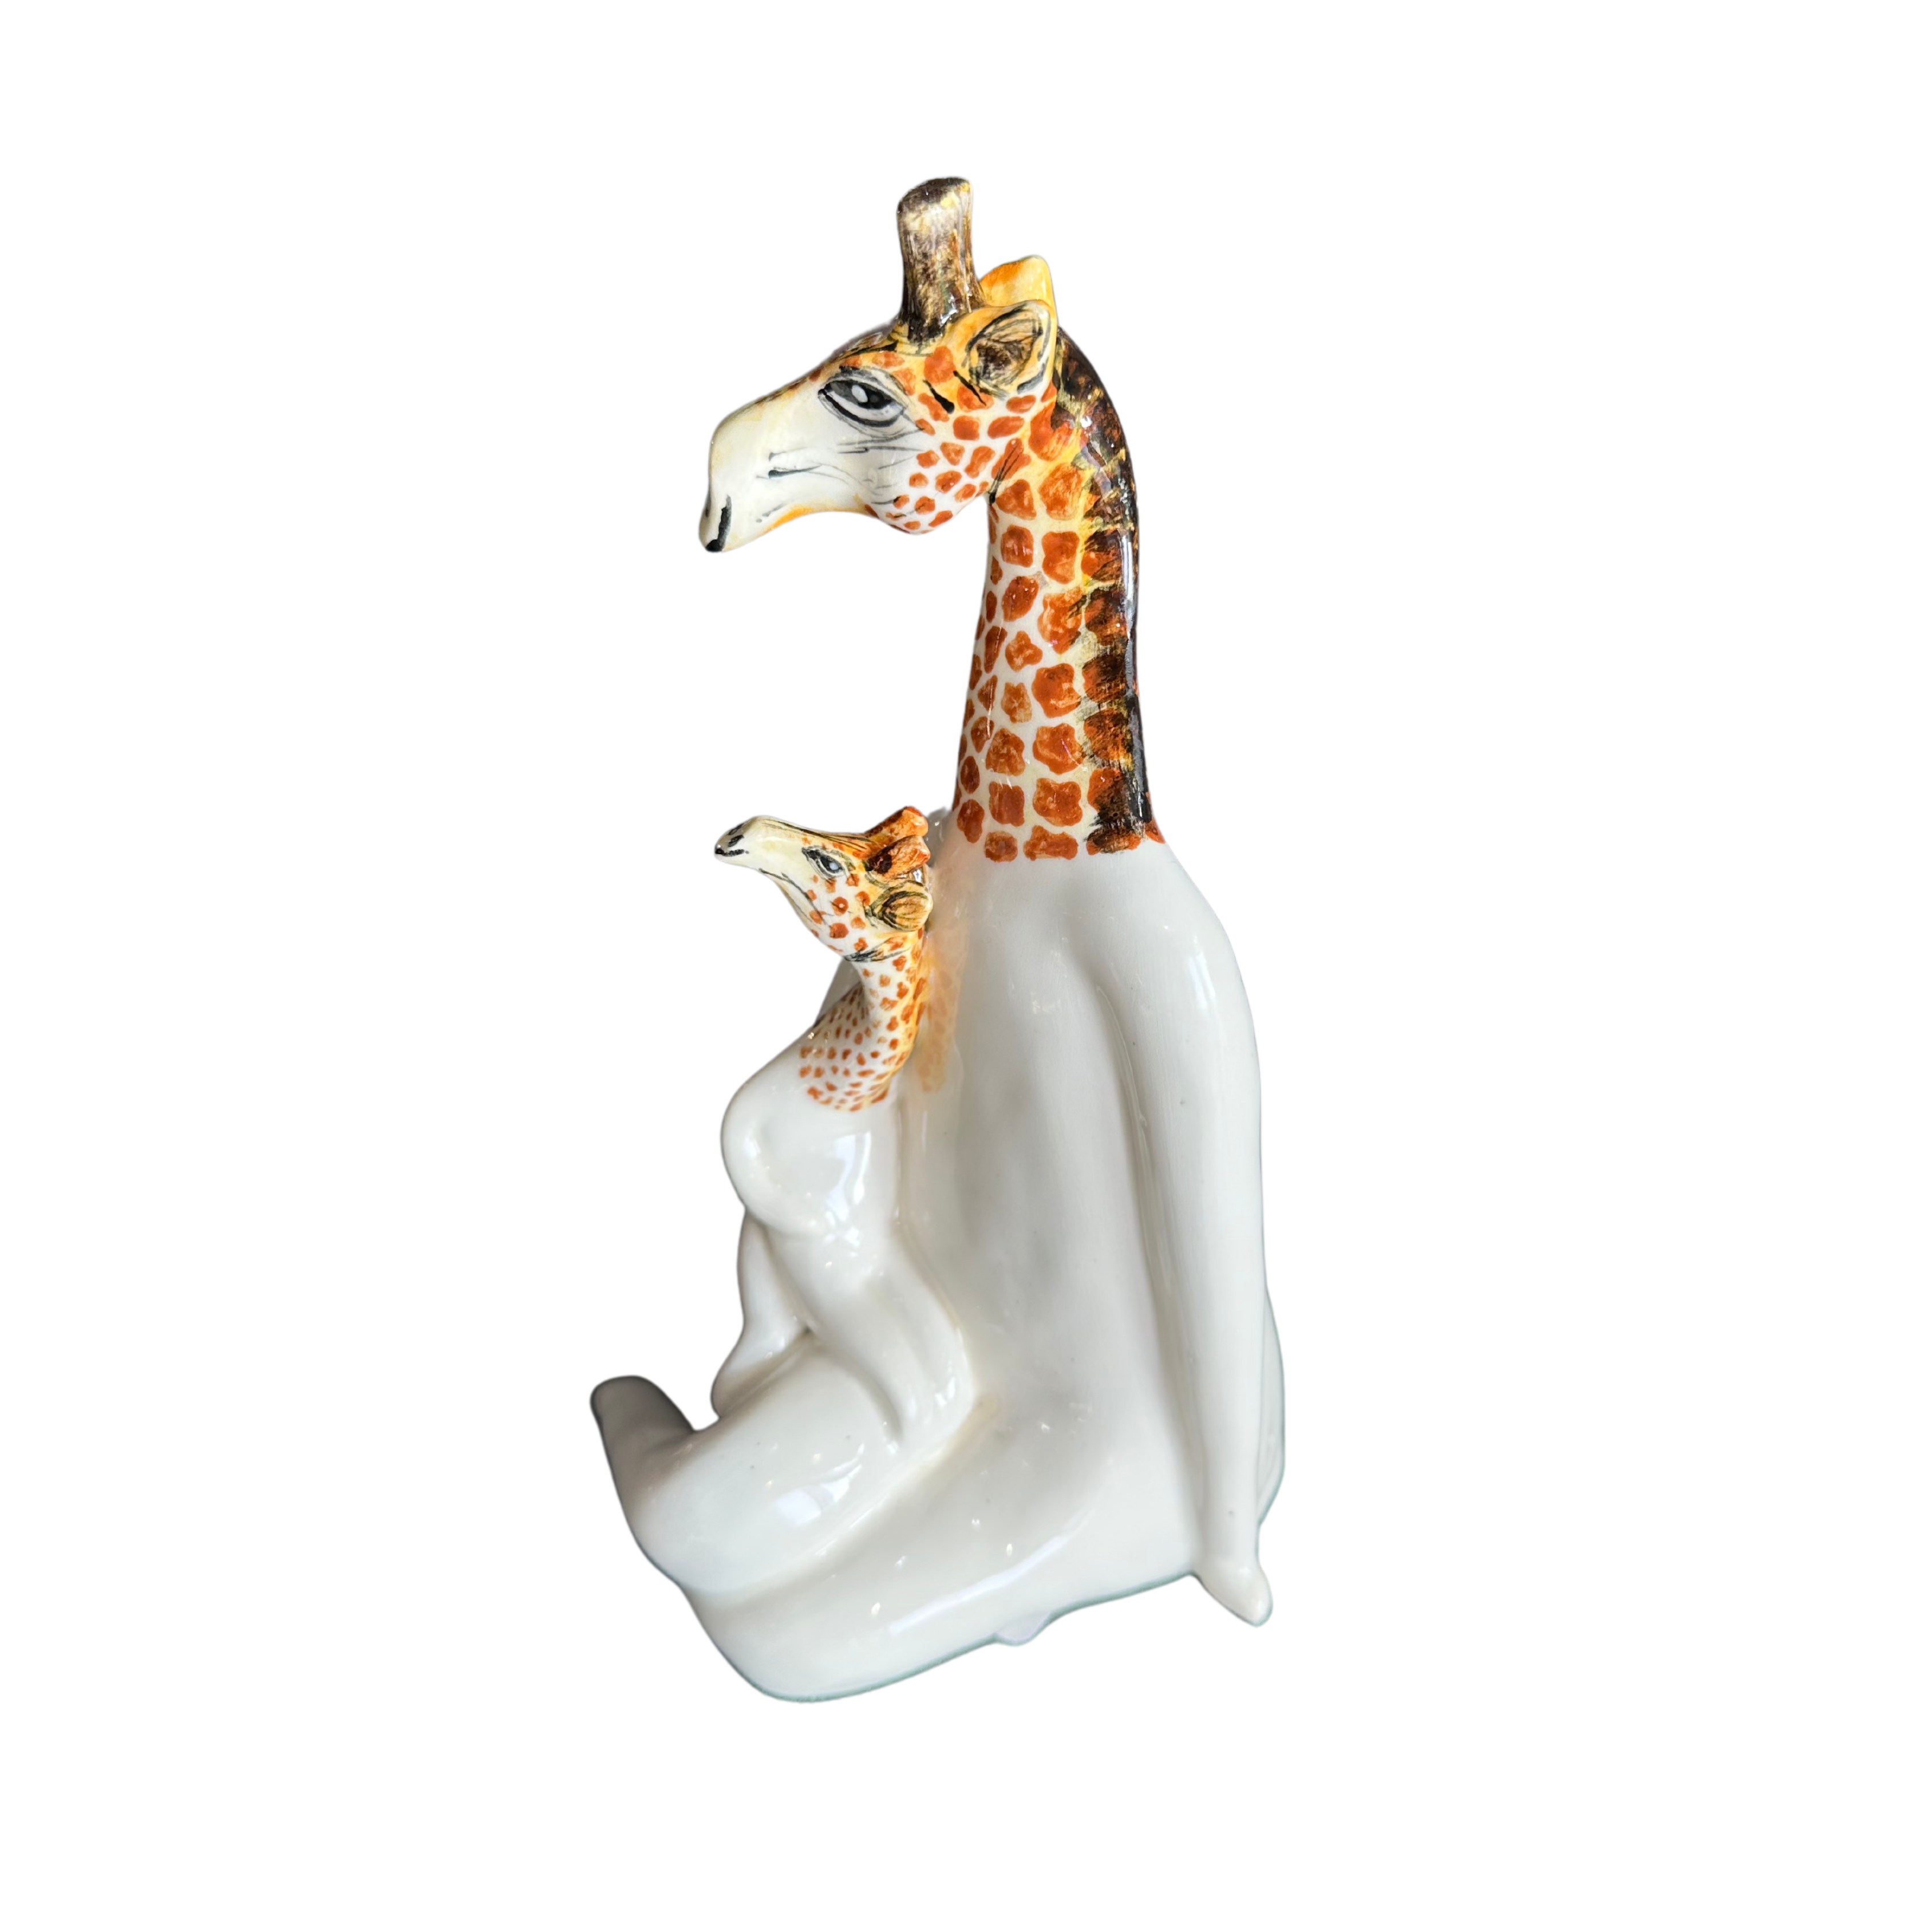 Medium Ceramic Giraffe Statue